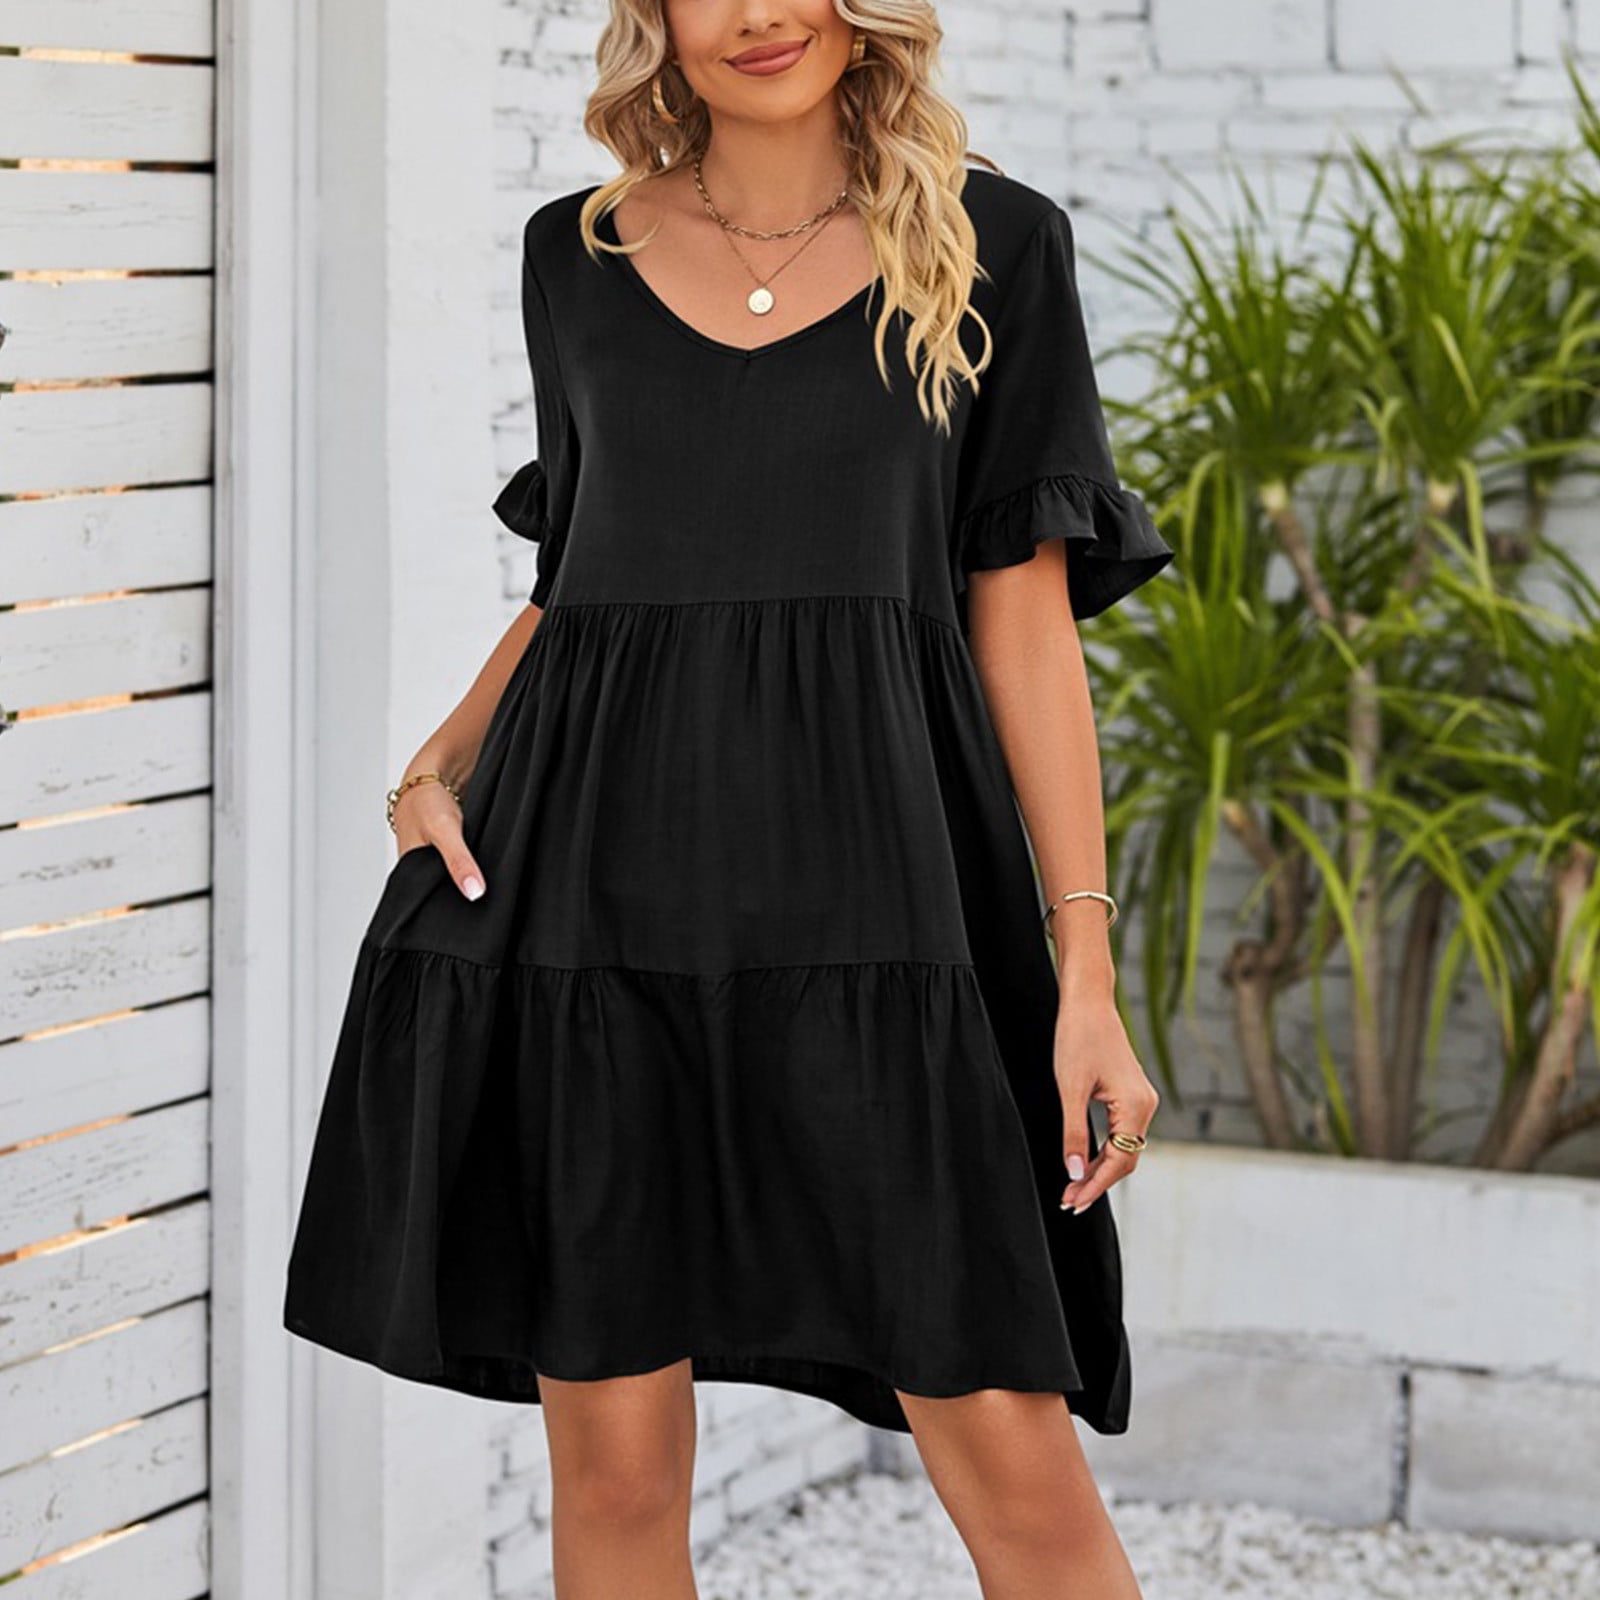 elegant black dress for funeral